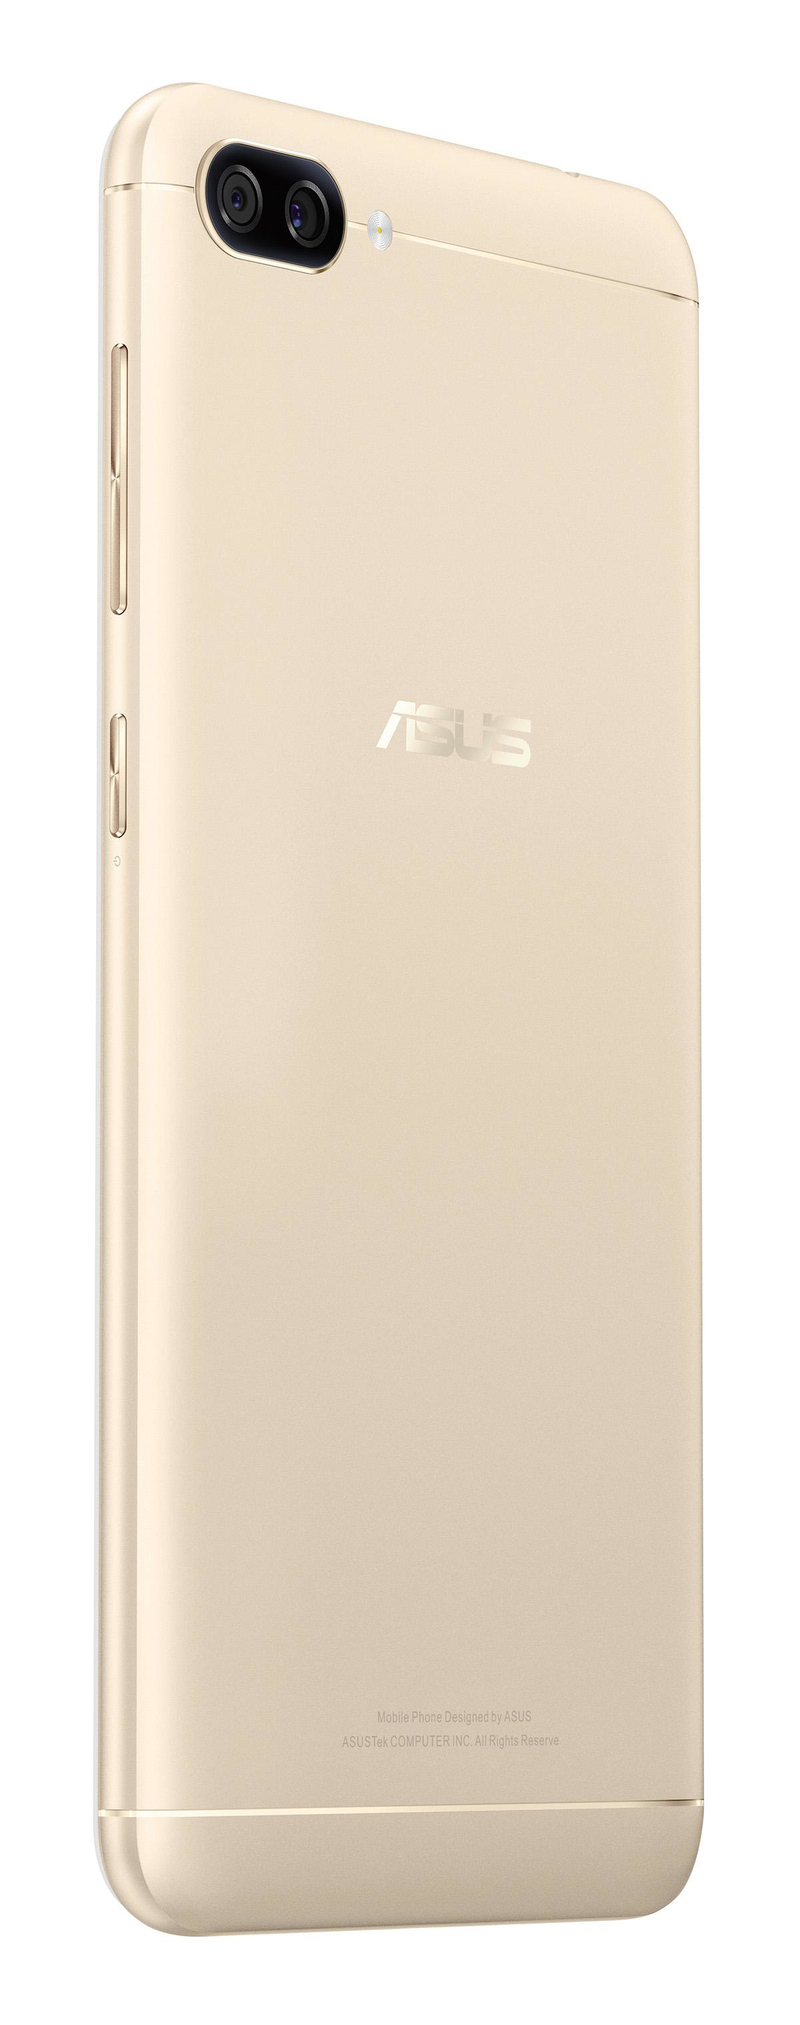 ASUS ZenFone 3 Max Smartphone Dual SIM 4G 16GB Gold